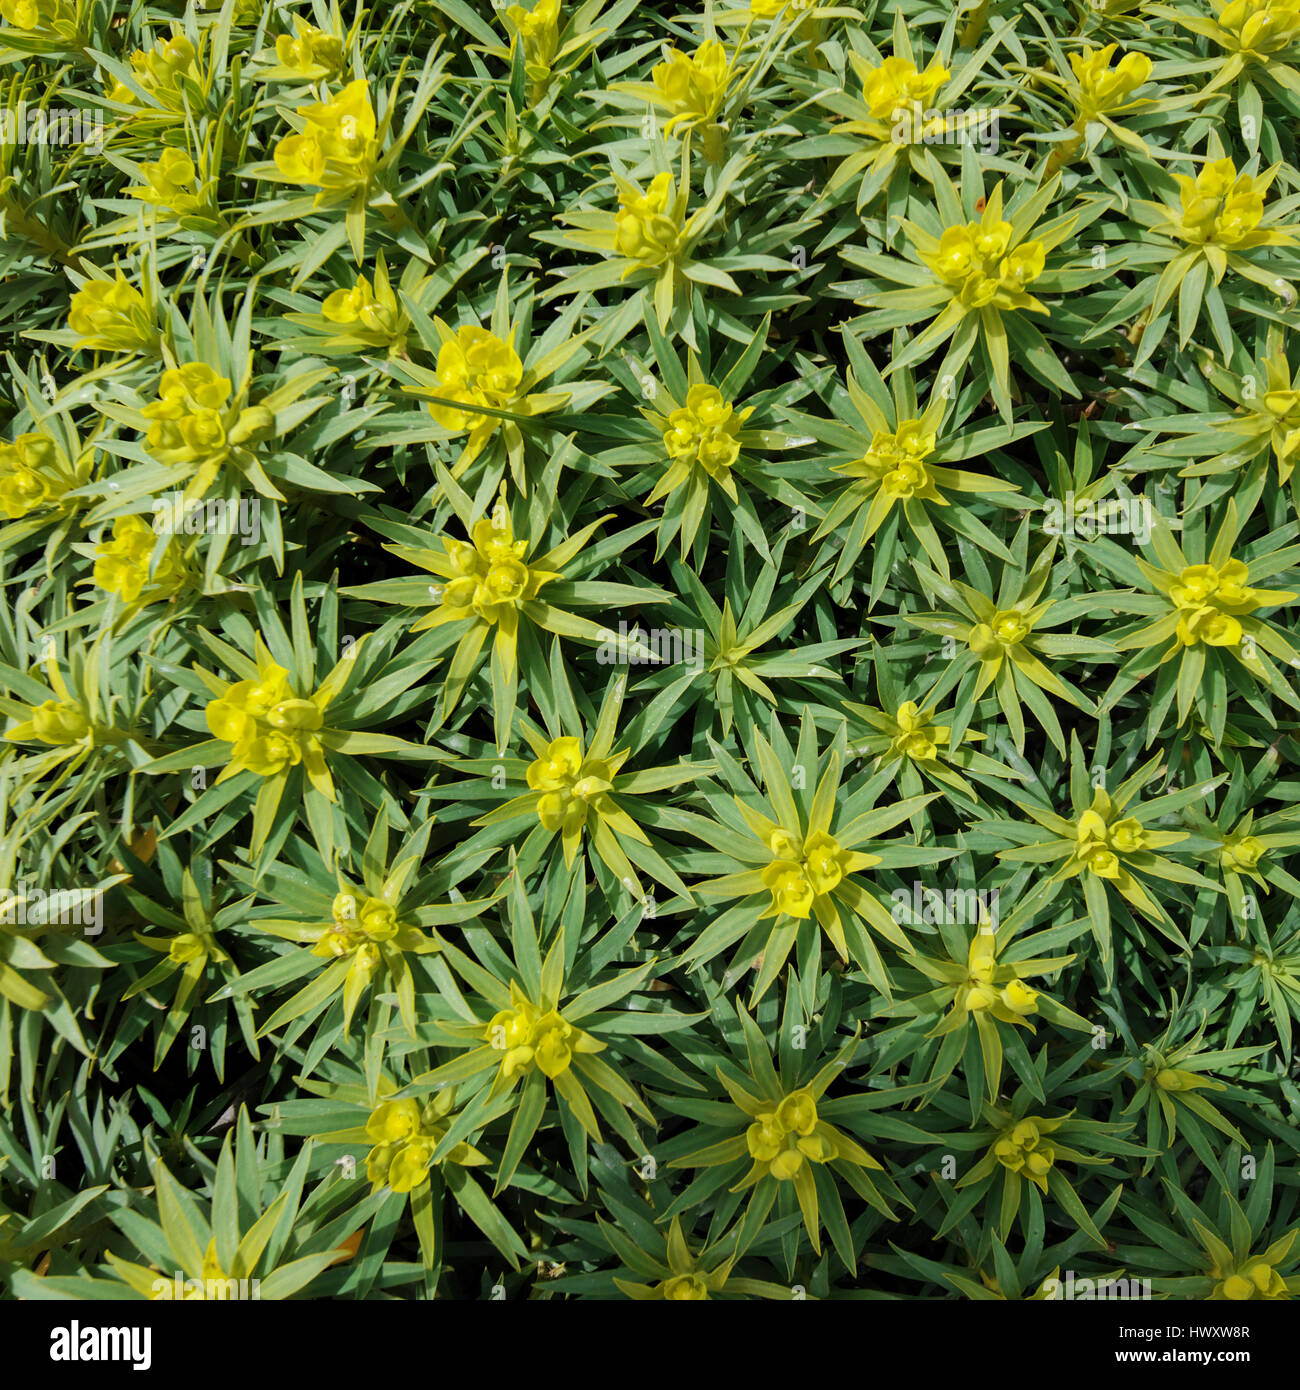 Euphorbia dendroides, the Tree spurge, from the family Euphorbiaceae native to the Mediterranean region Malta Stock Photo